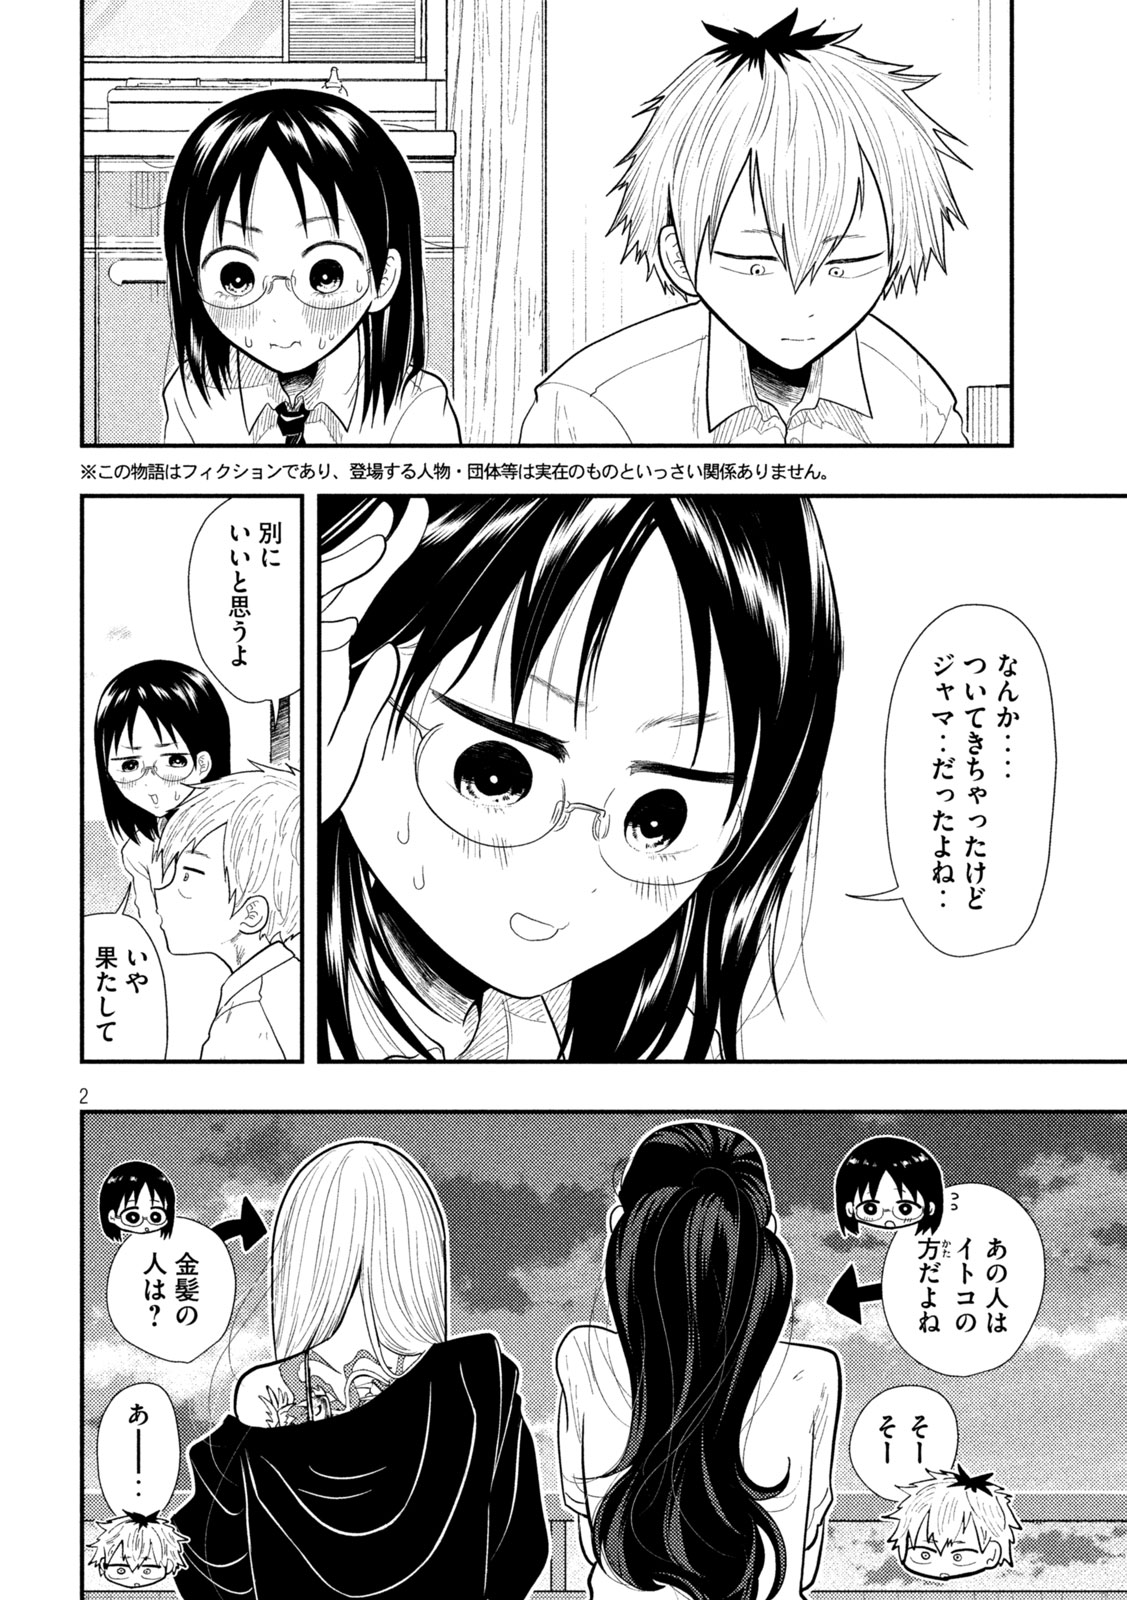 Heisei Haizanhei Sumire-chan - Chapter 18 - Page 2